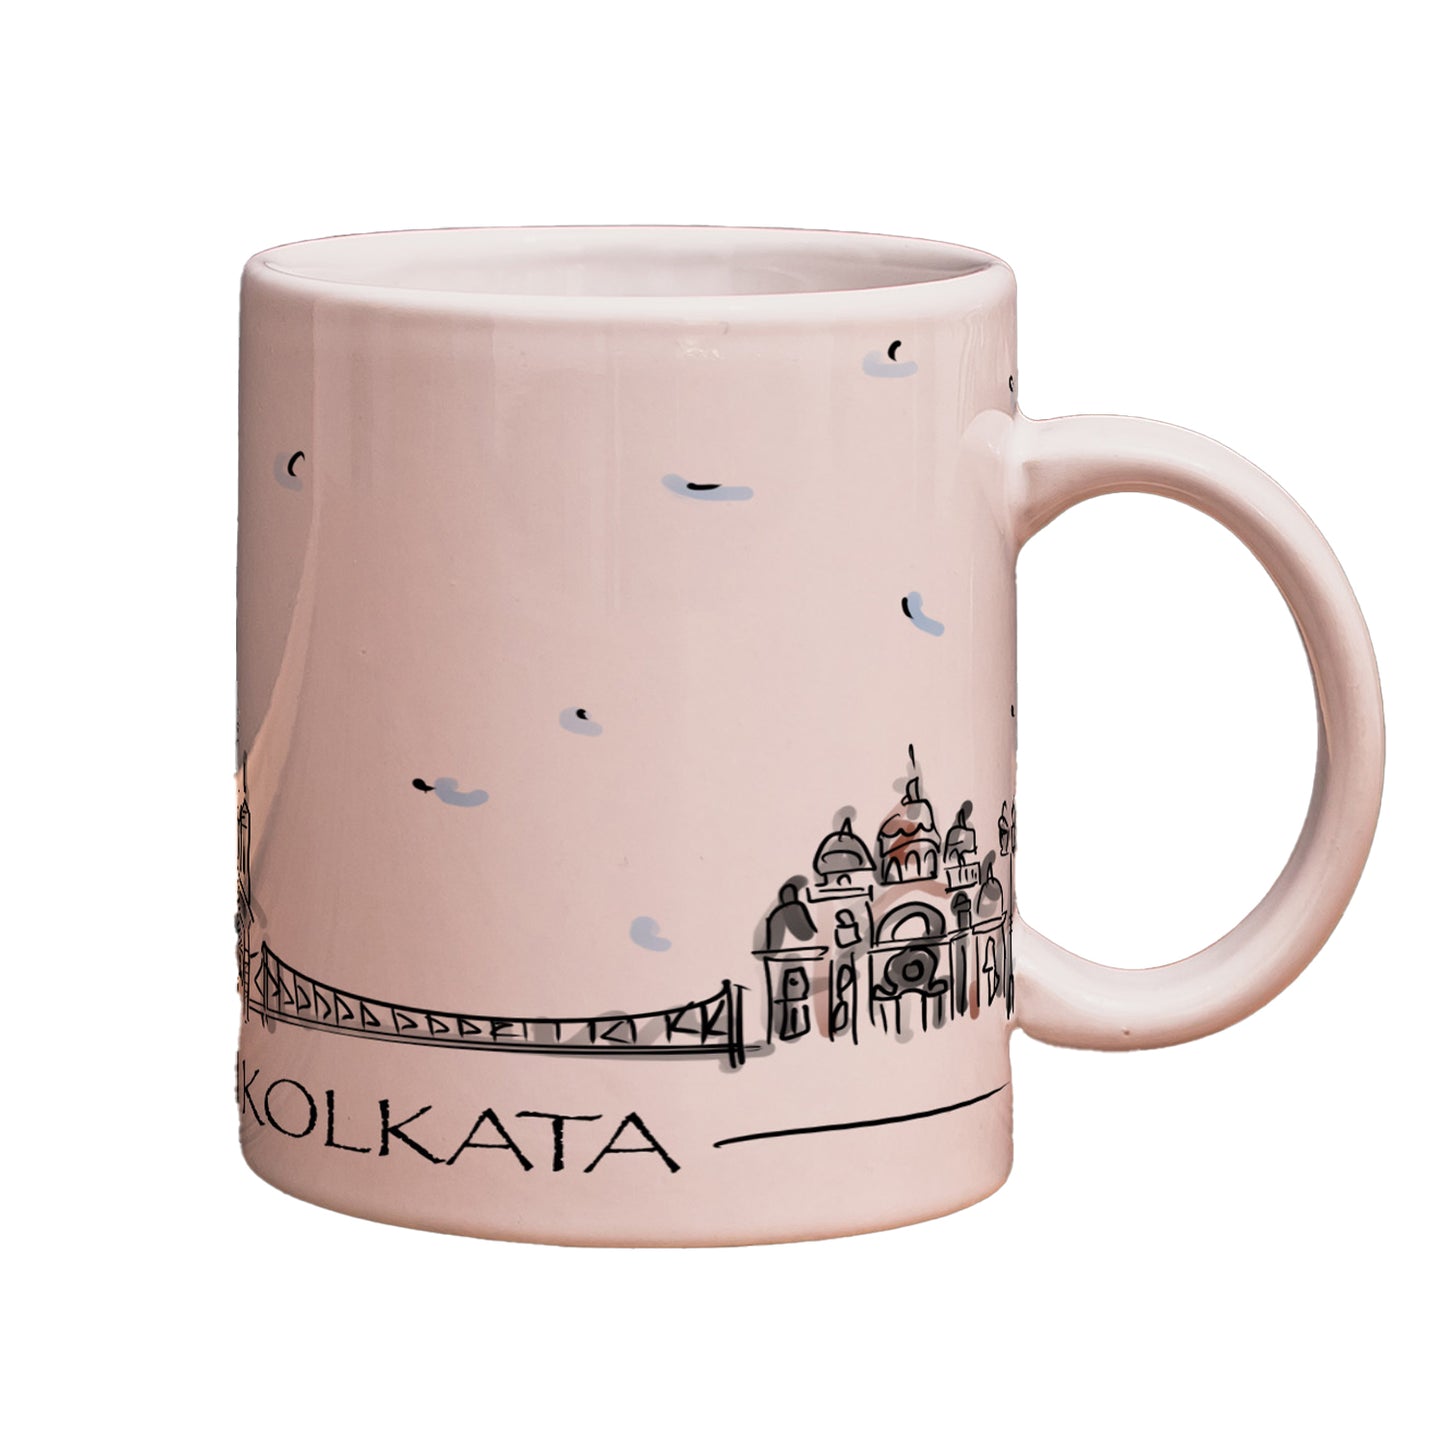 Kolkata Vibe Coffee Mug